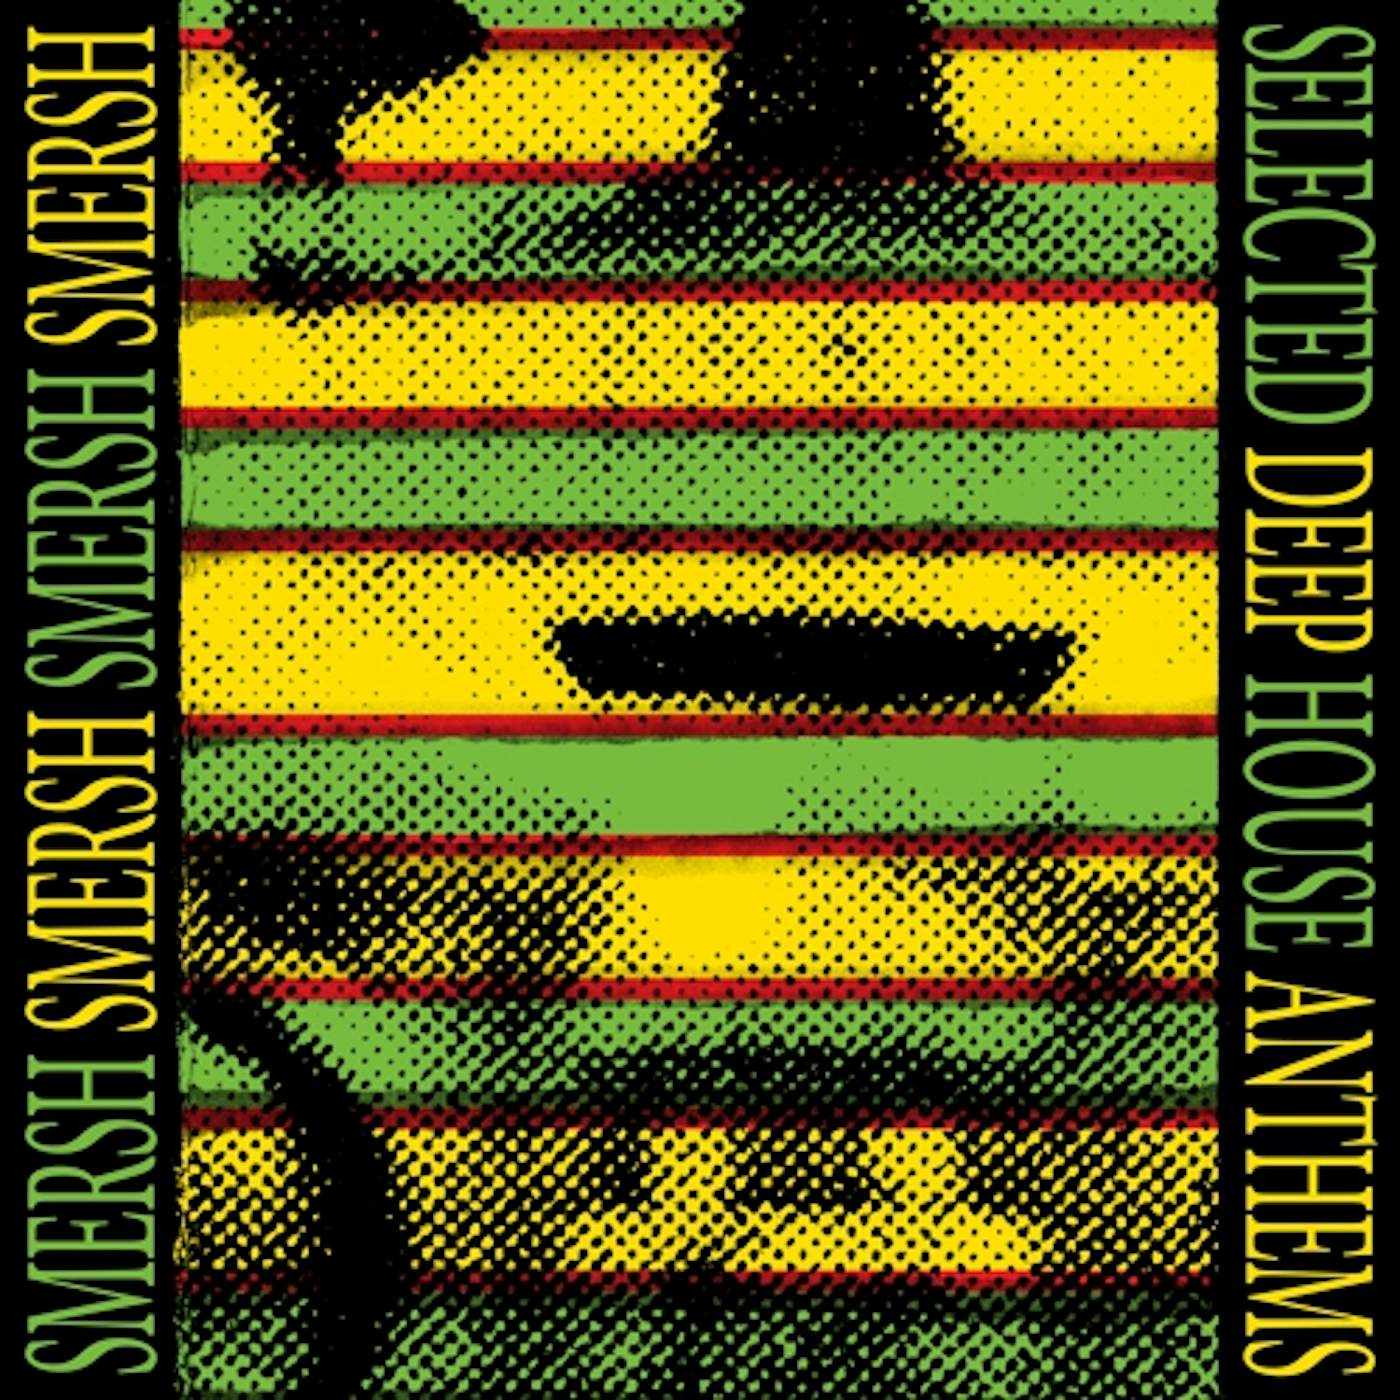 SMERSH Selected Deep House Anthems Vinyl Record